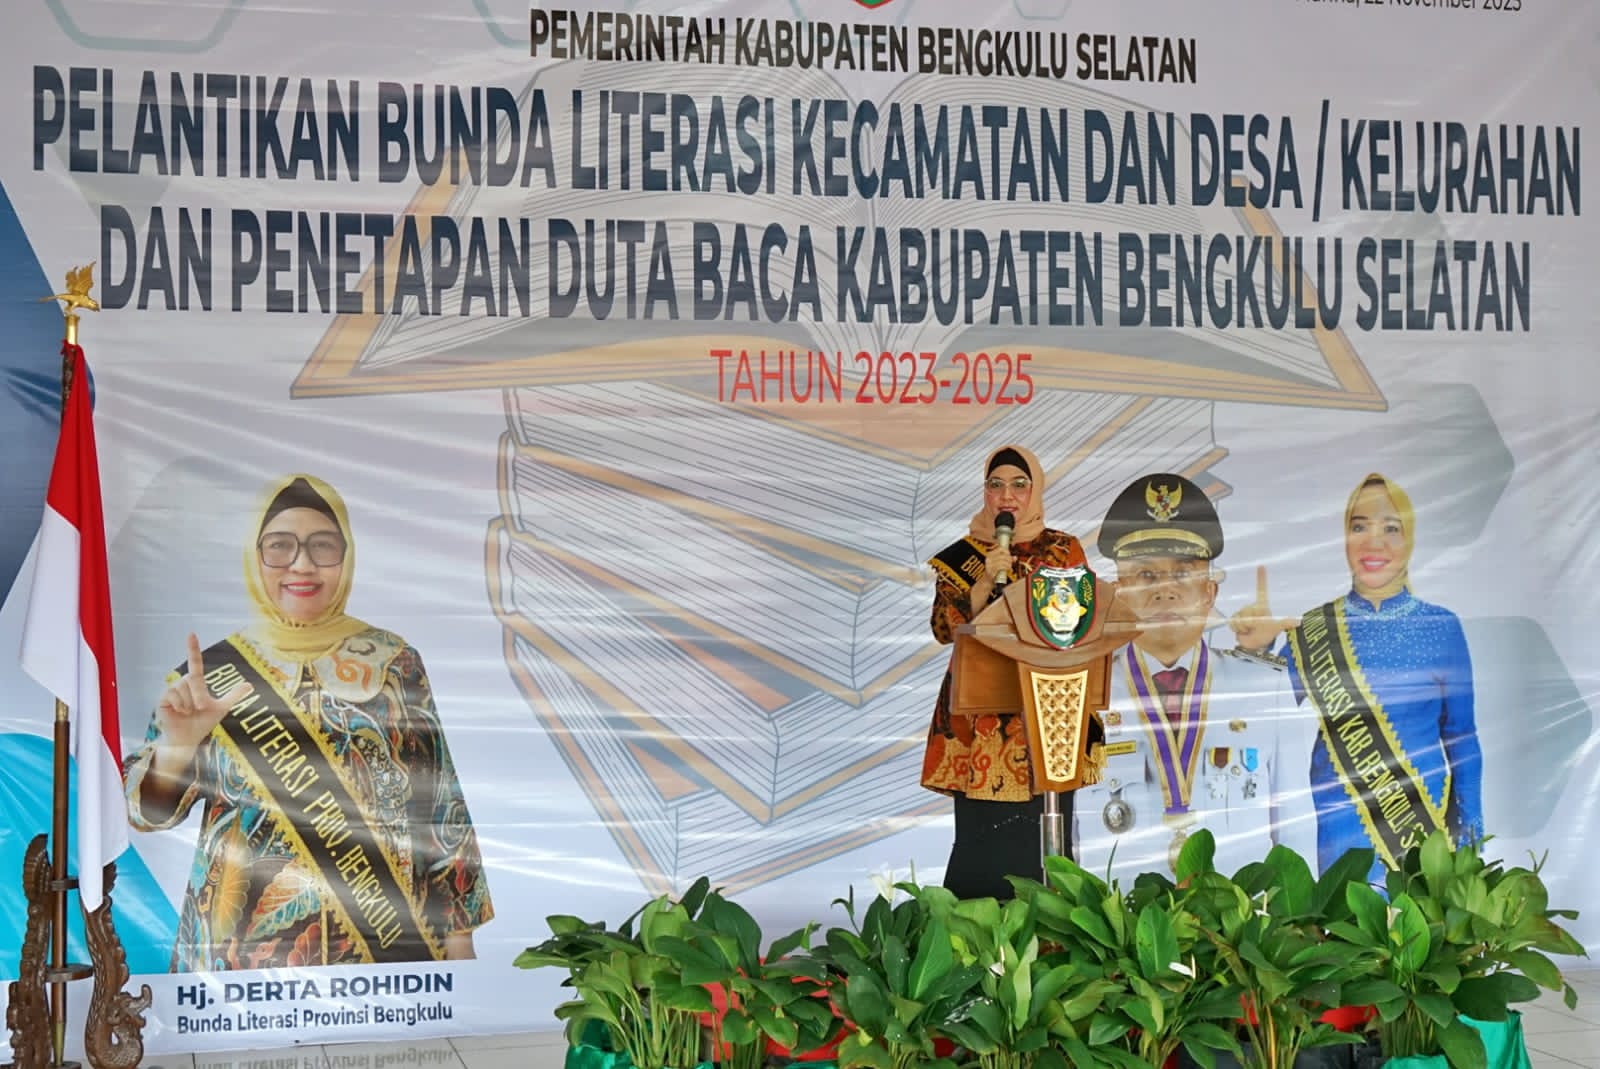 Bunda Literasi Provinsi Bengkulu Lantik Bunda Literasi Kecamatan, Desa/Kelurahan di Kabupaten Bengkulu Selatan